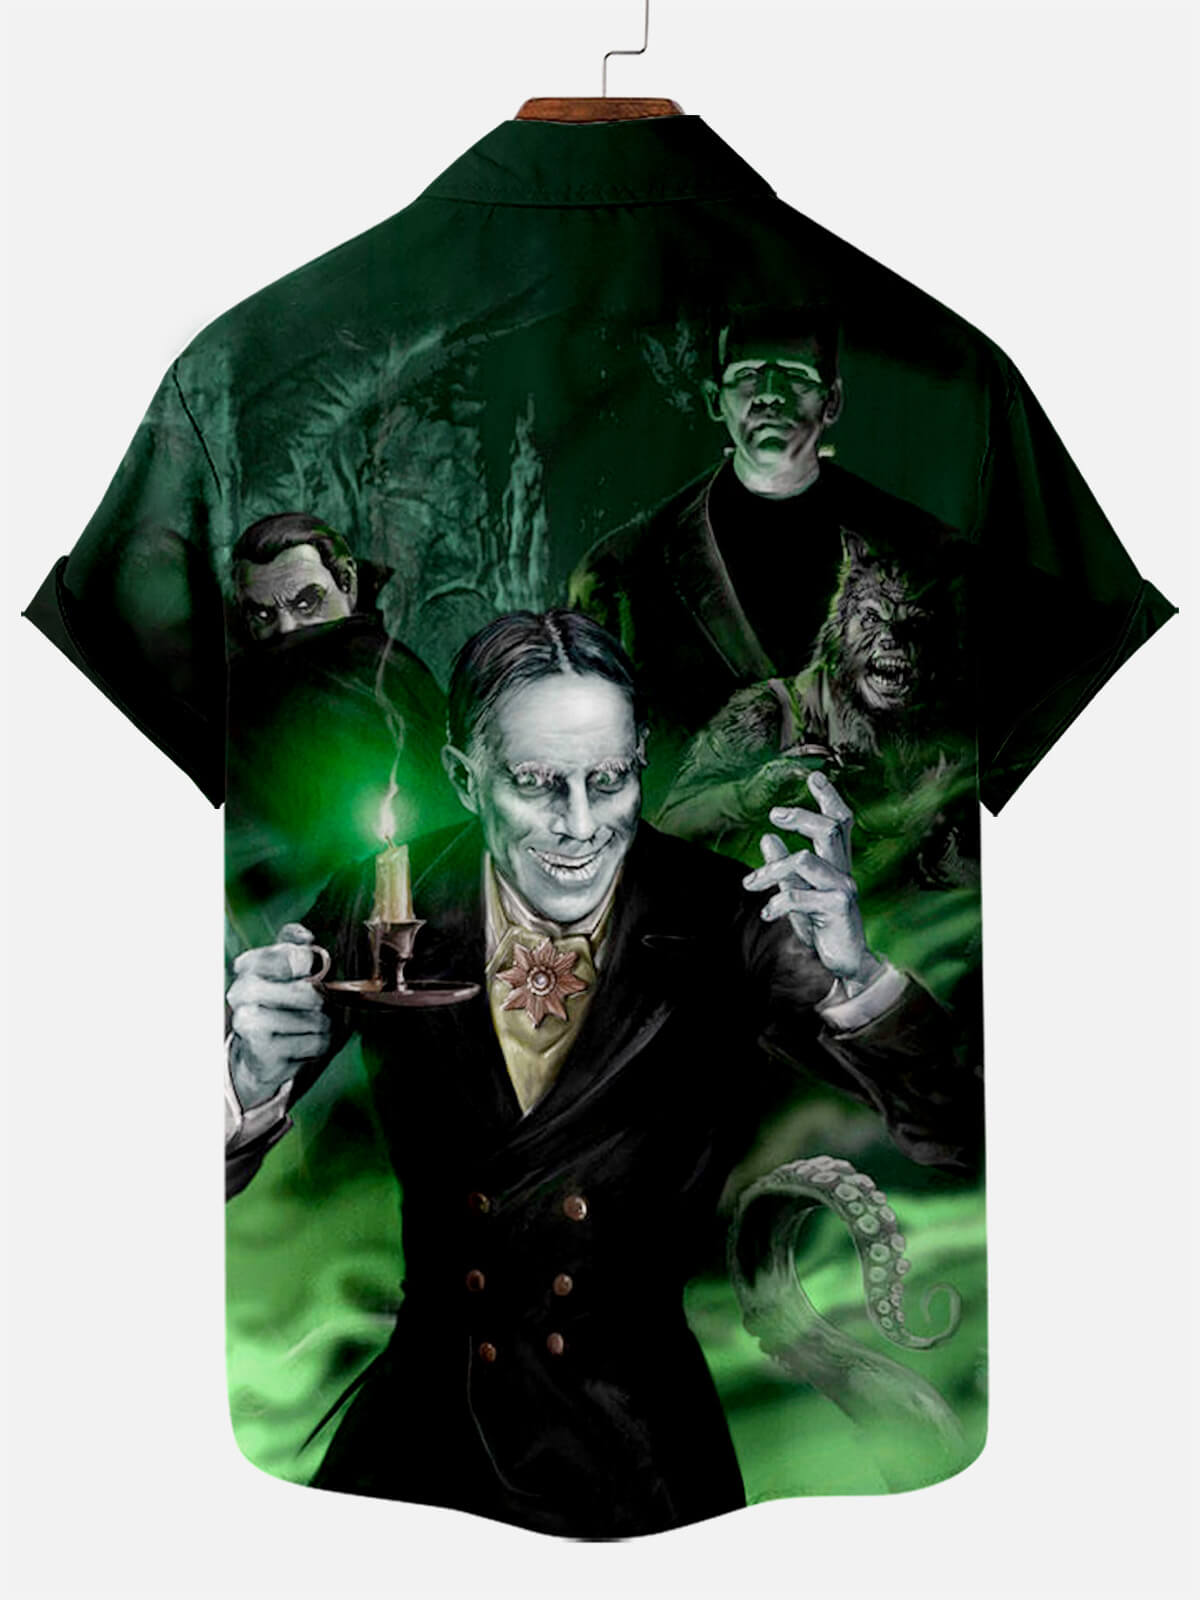 Men's Horror Green Movie Character Print Short Sleeve Shirt